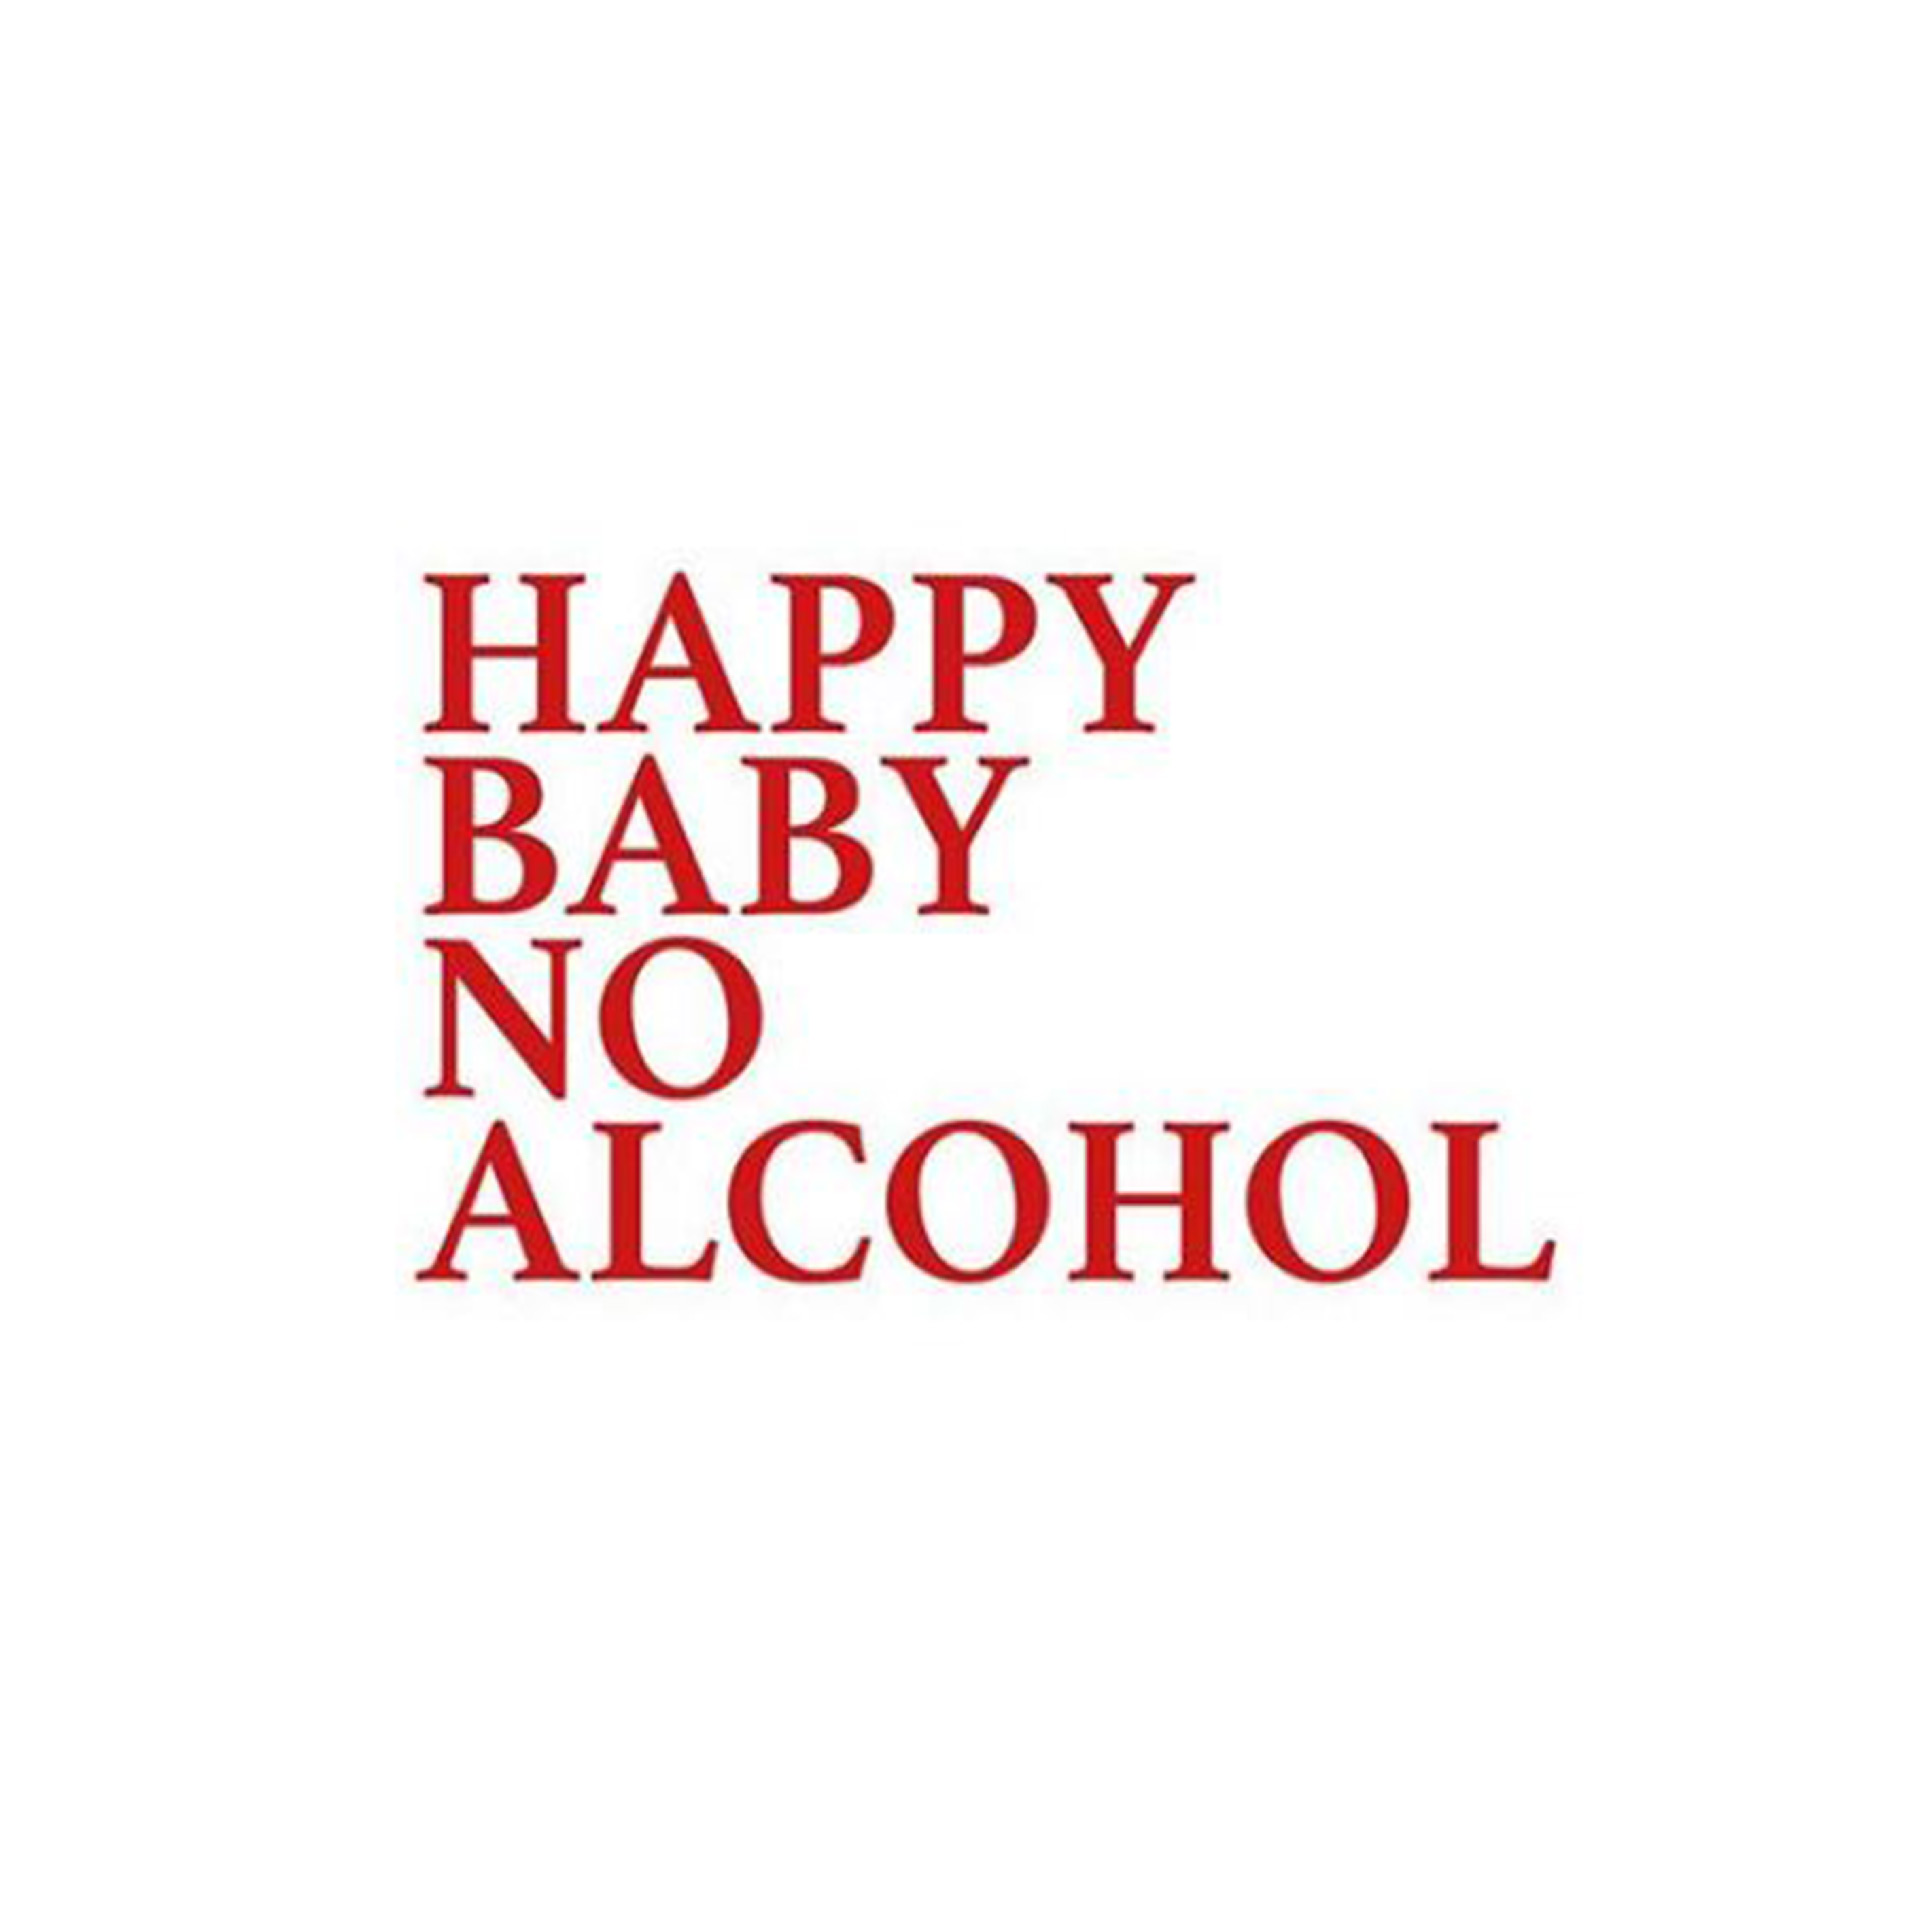 Text: Happy Baby - No Alcohol